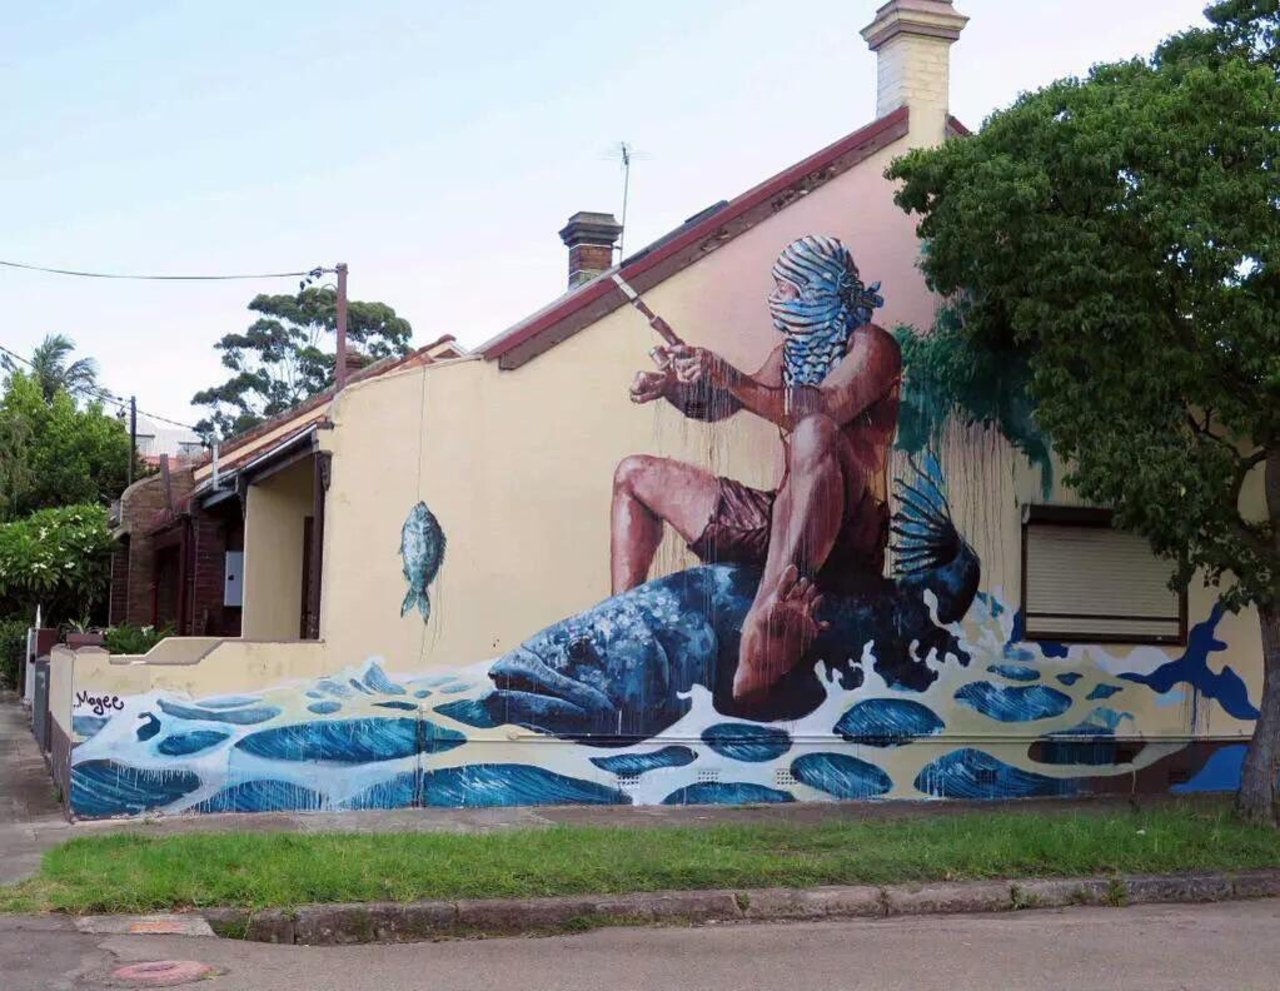 #mural by Fintan Magee#Sydney #Australia #streetart #art #urbanart https://t.co/QOWEI9zYjV